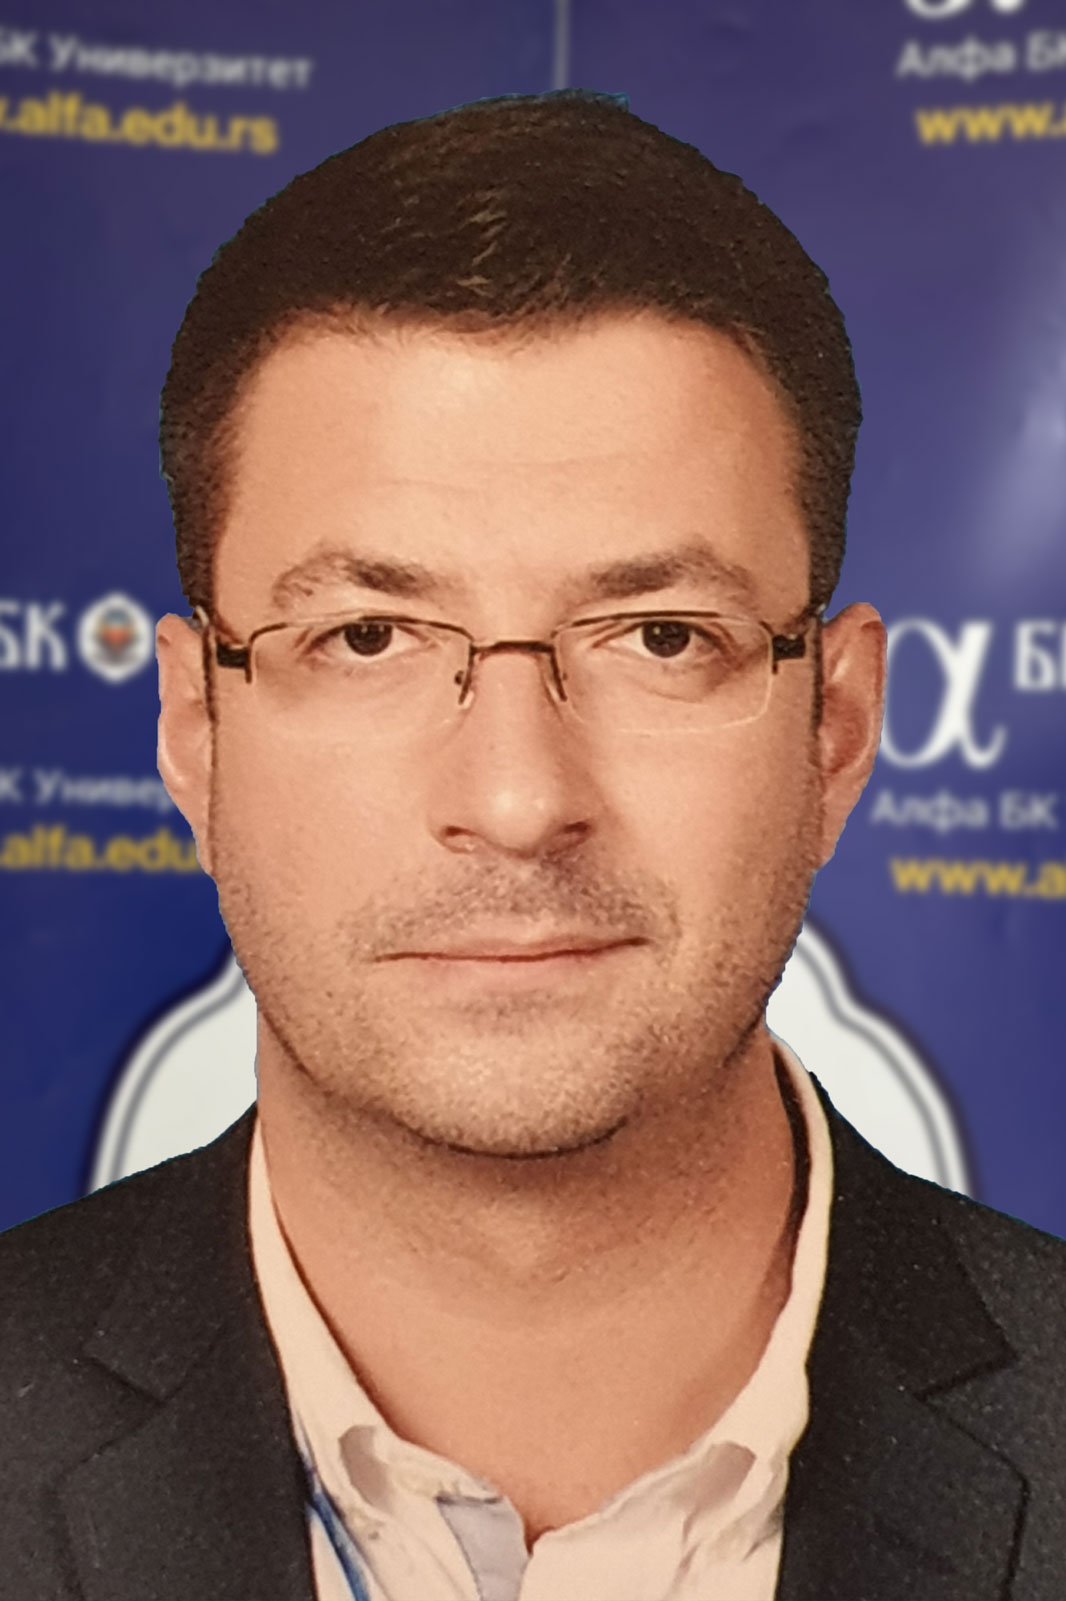 Milan Đorđević